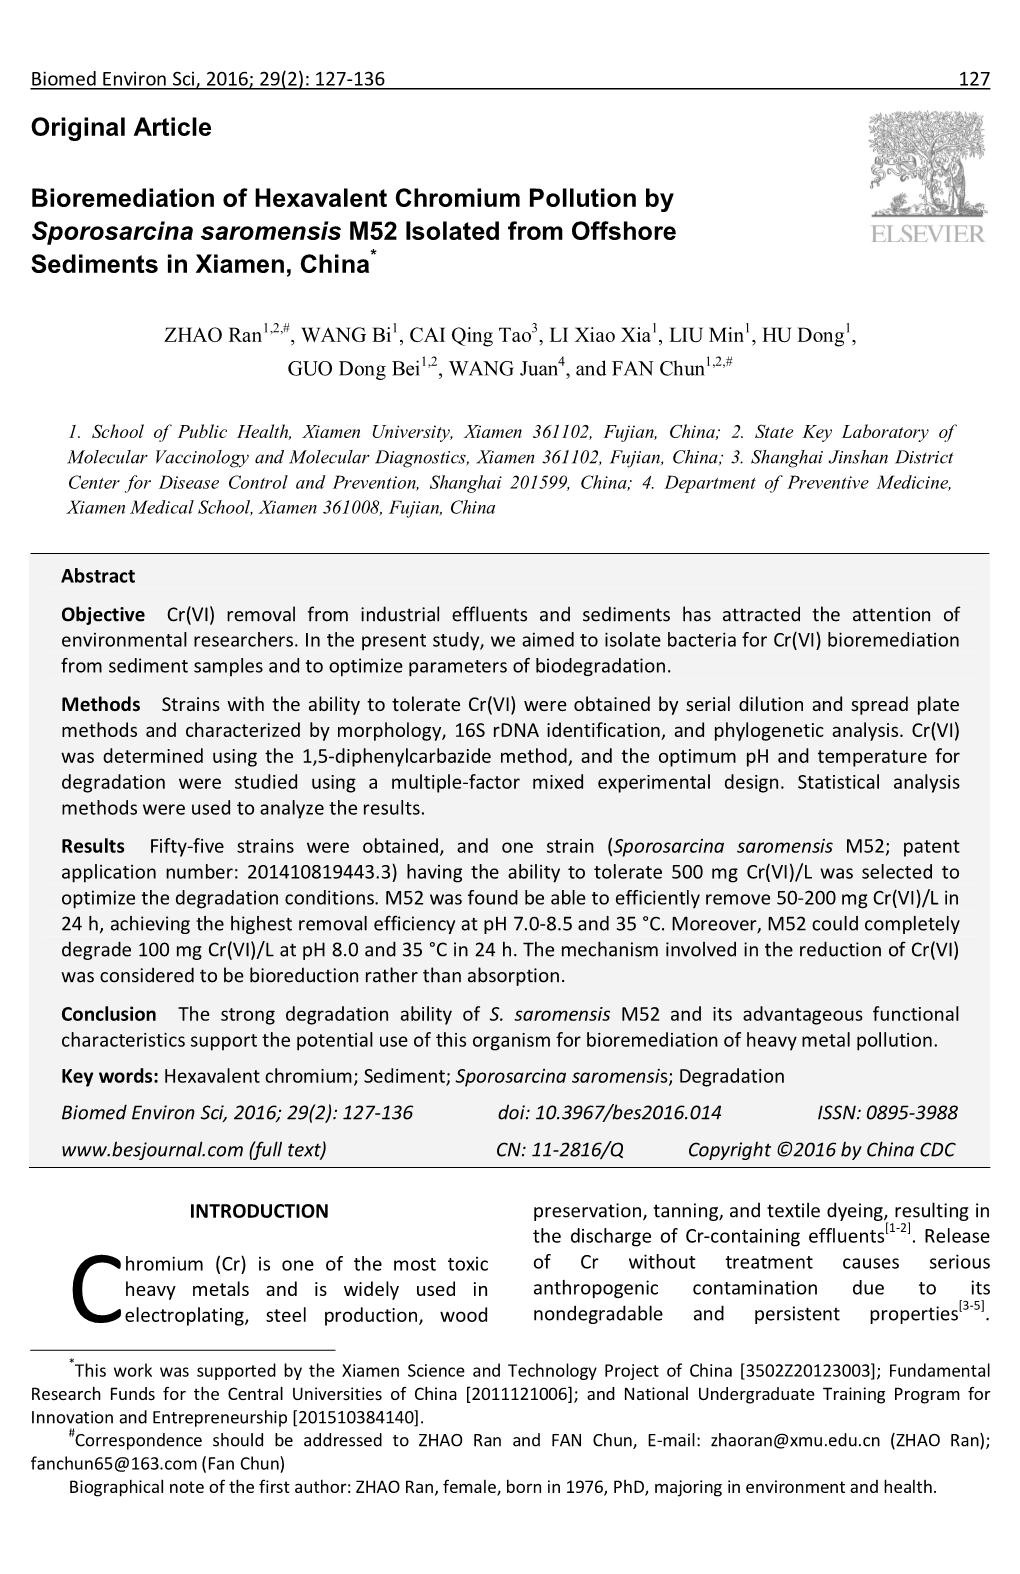 Original Article Bioremediation of Hexavalent Chromium Pollution By